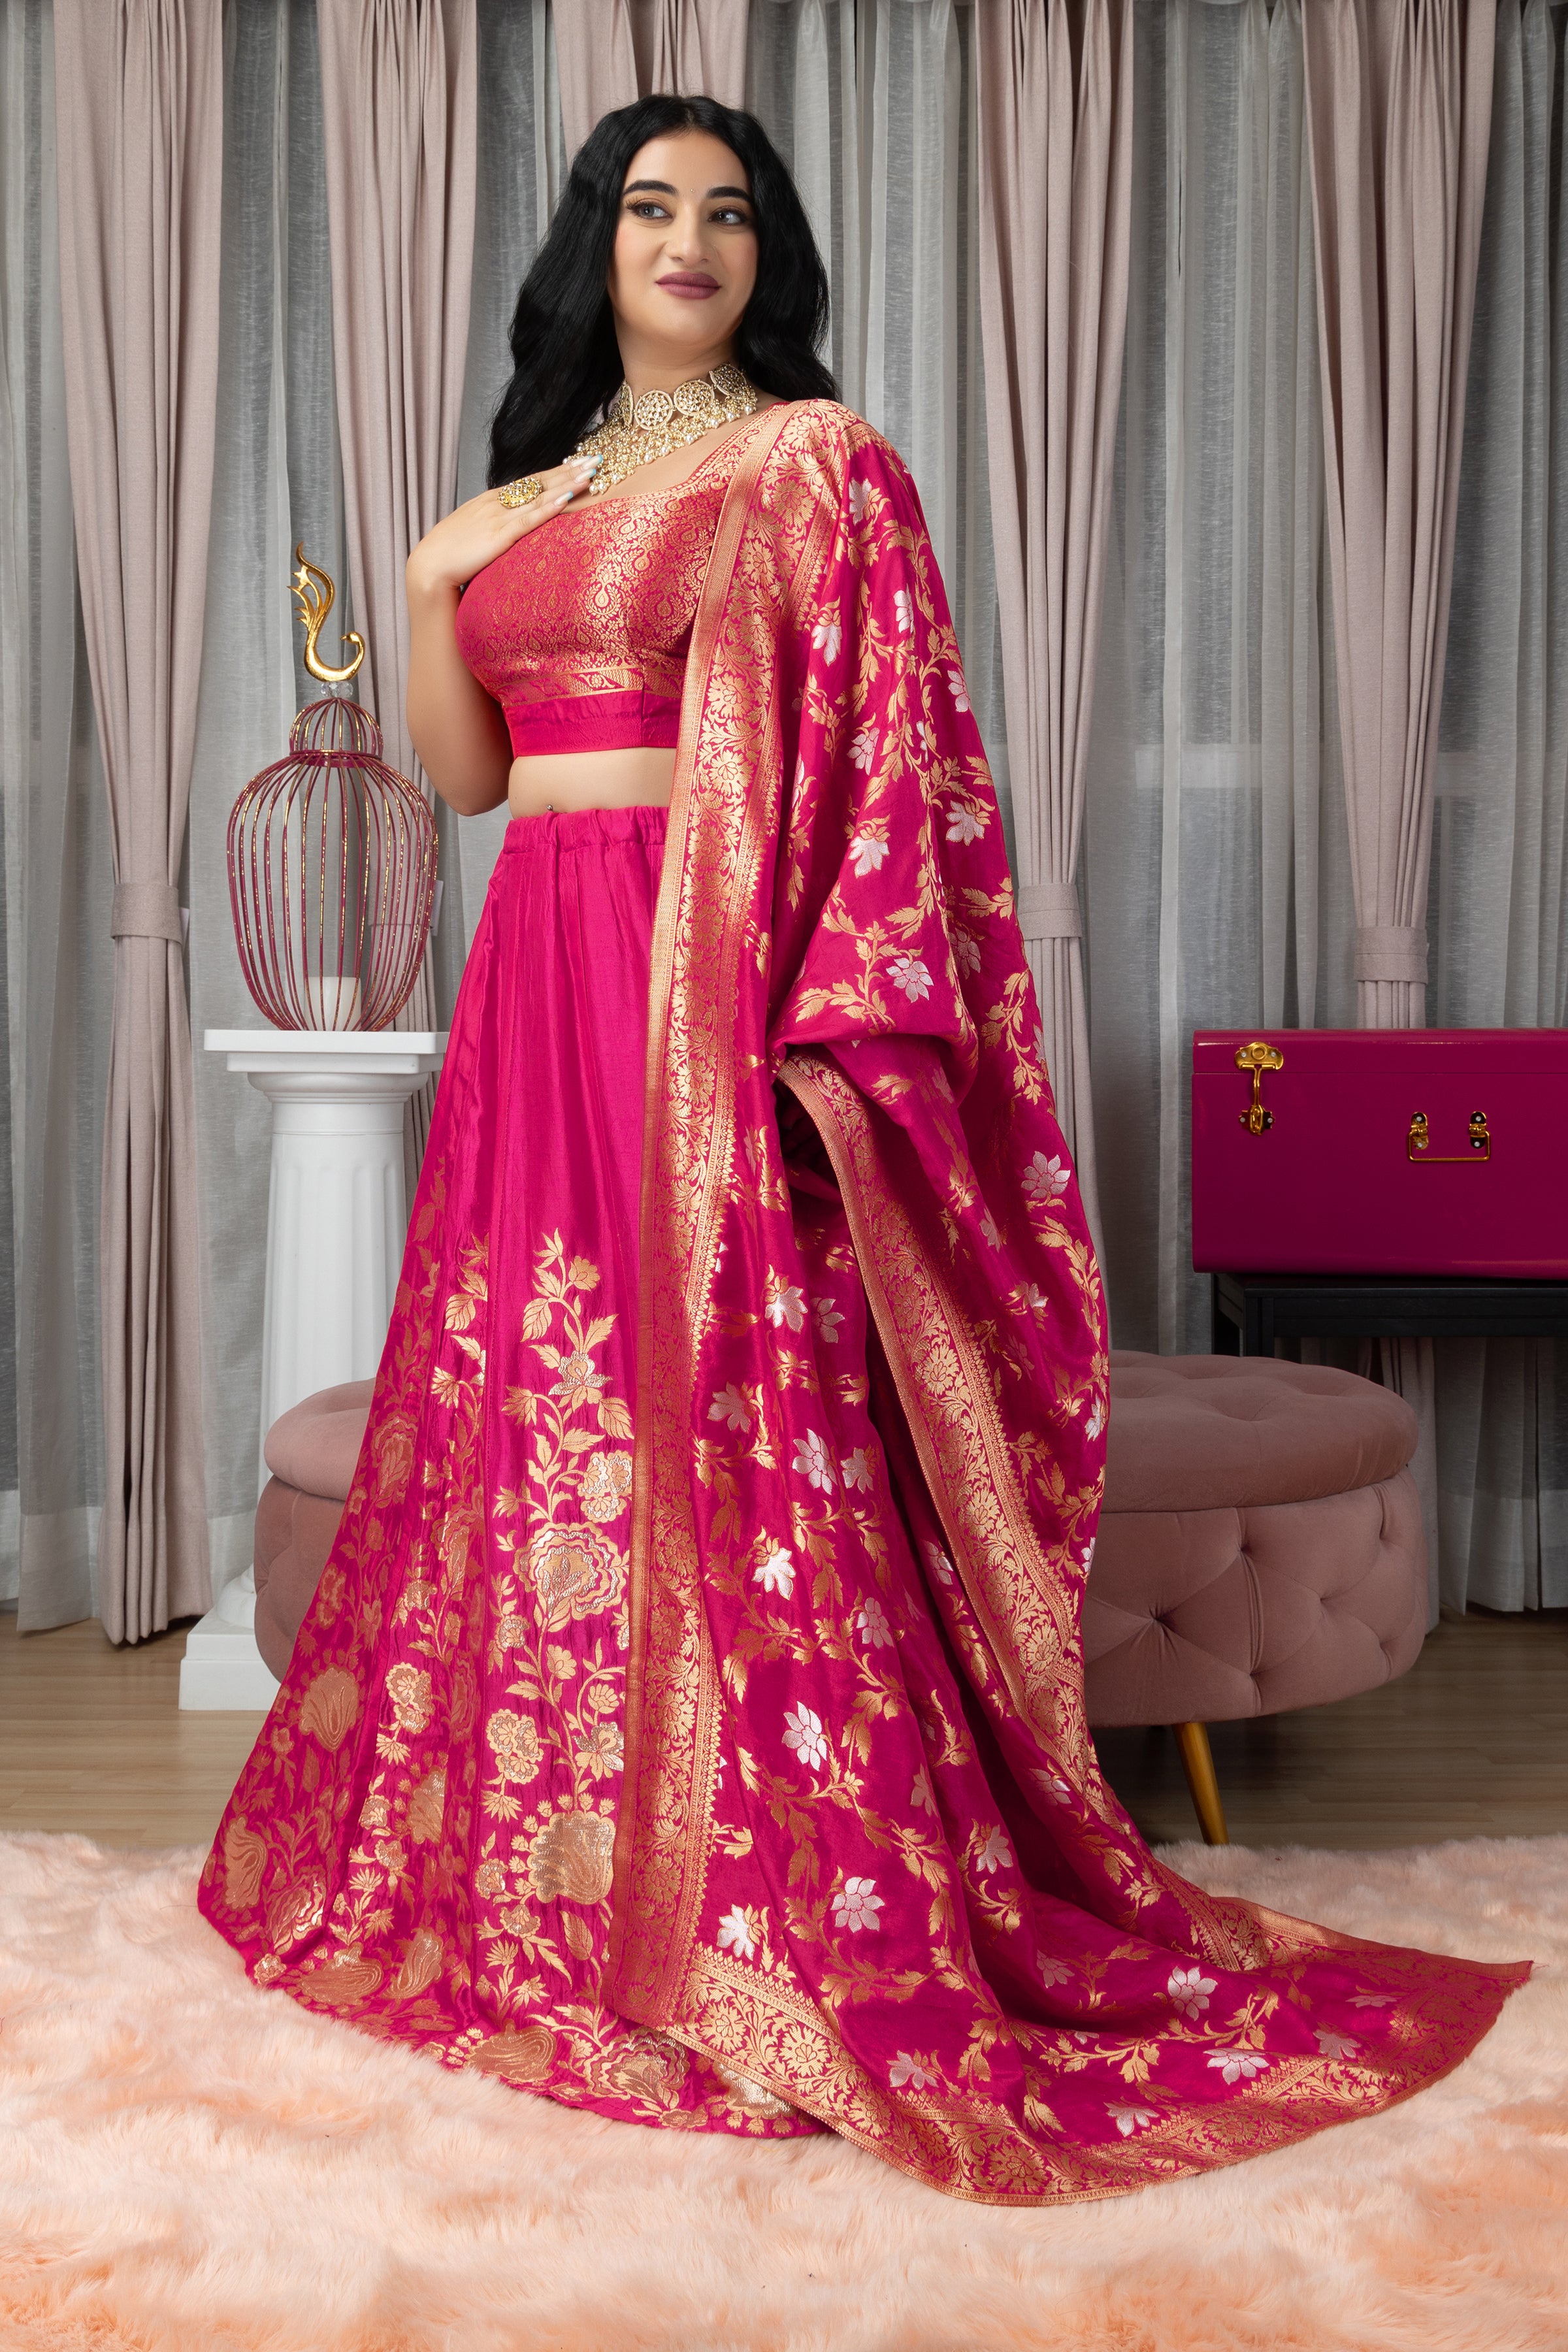 How to Wear Saree for Plus Size 20 Ideas & Styling Tips | Lehenga saree  design, Lehenga style saree, Half saree